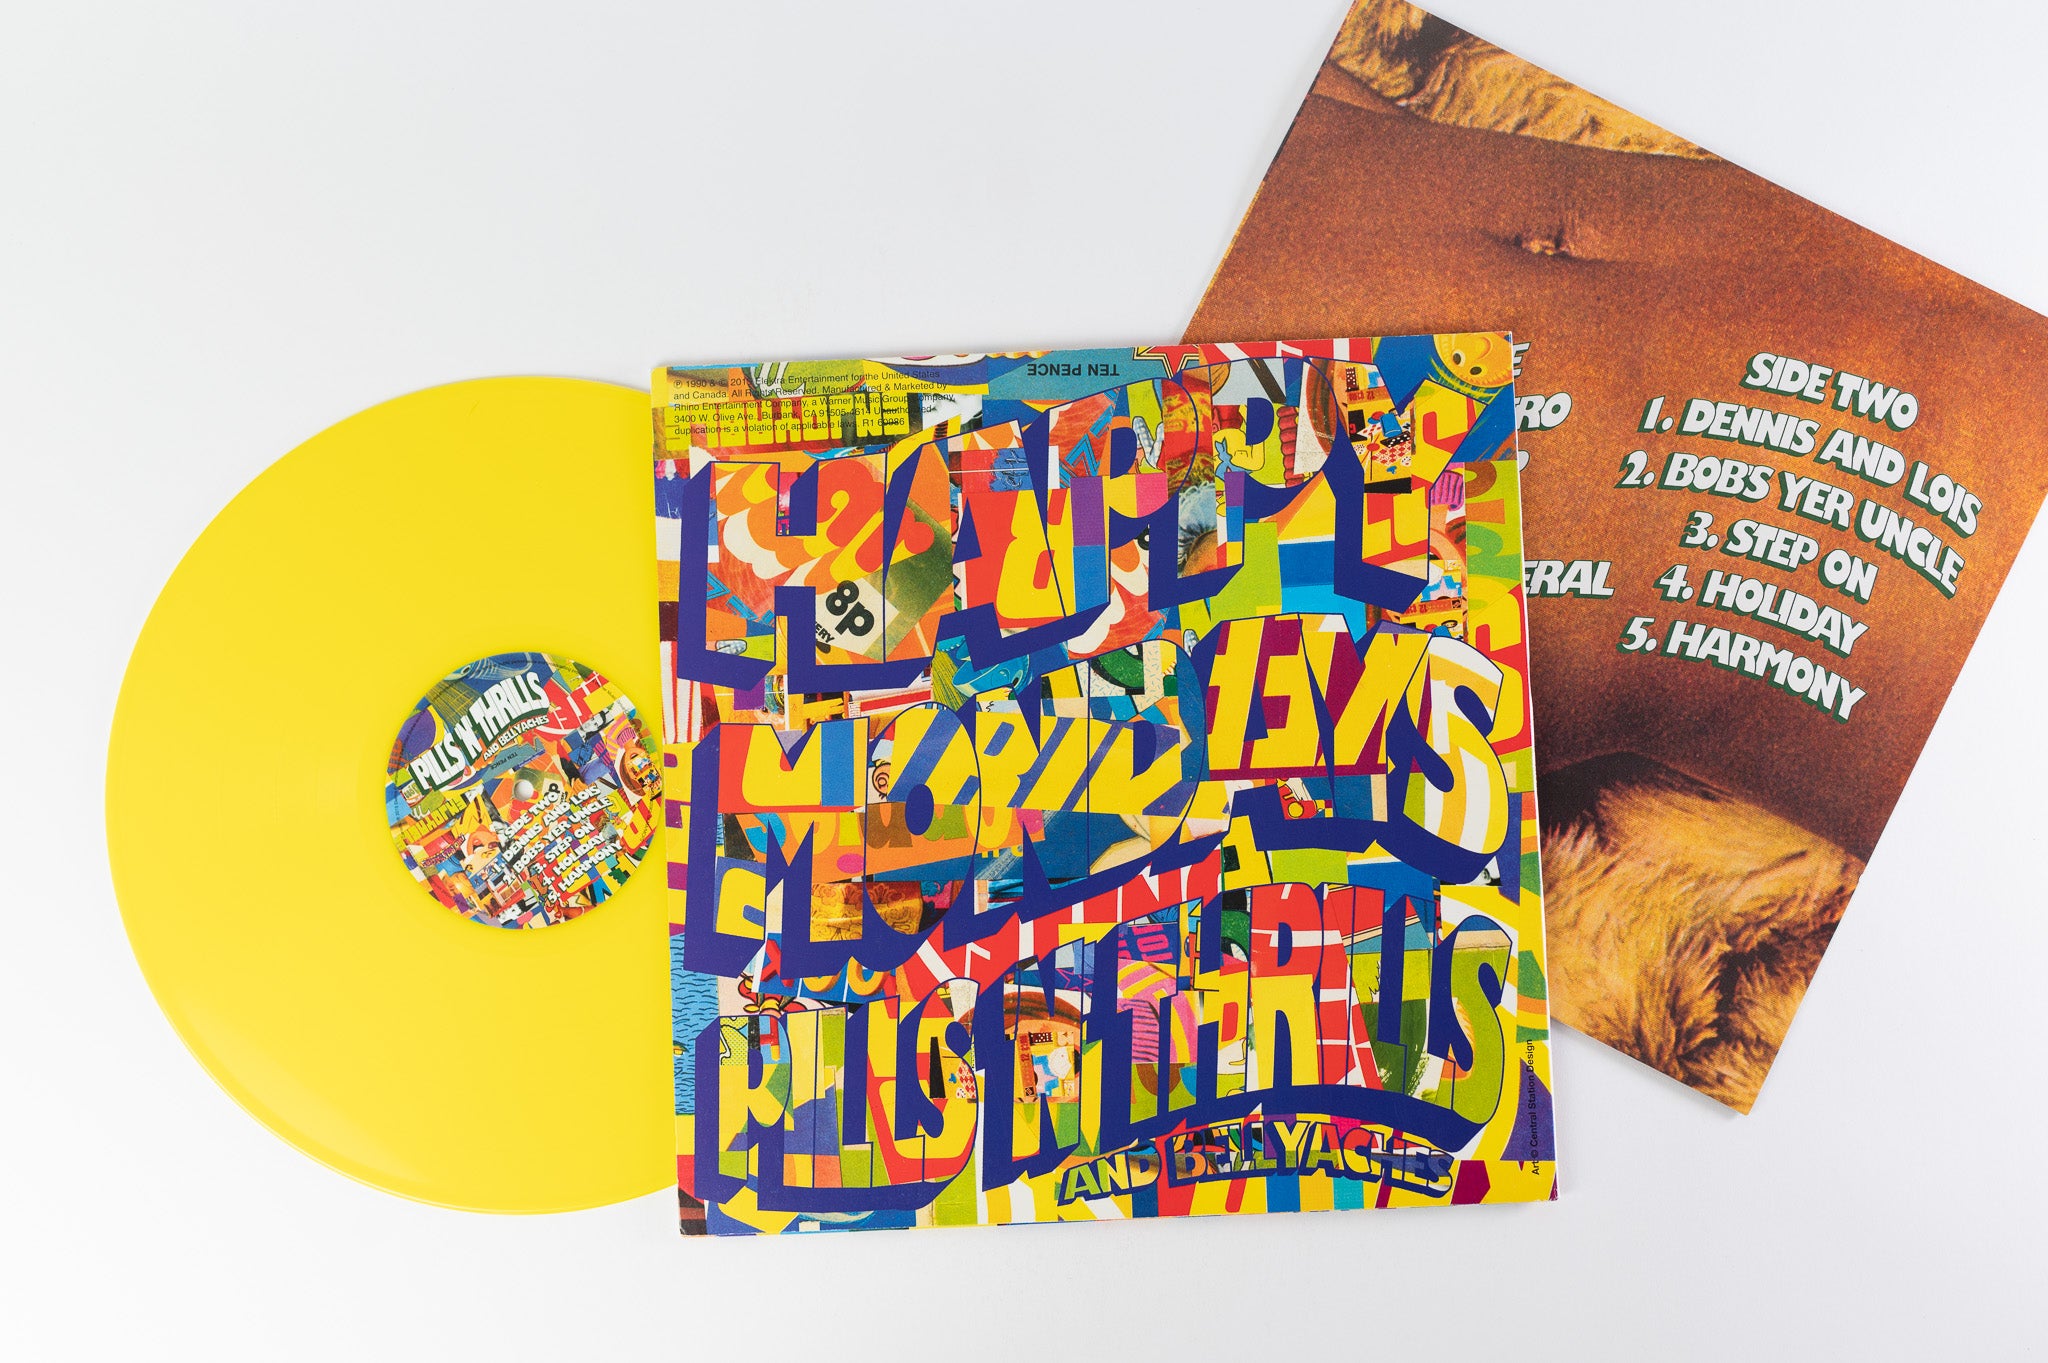 Happy Mondays - Pills 'N' Thrills And Bellyaches on Rhino RSD 2015 Ltd Yellow Vinyl Reissue